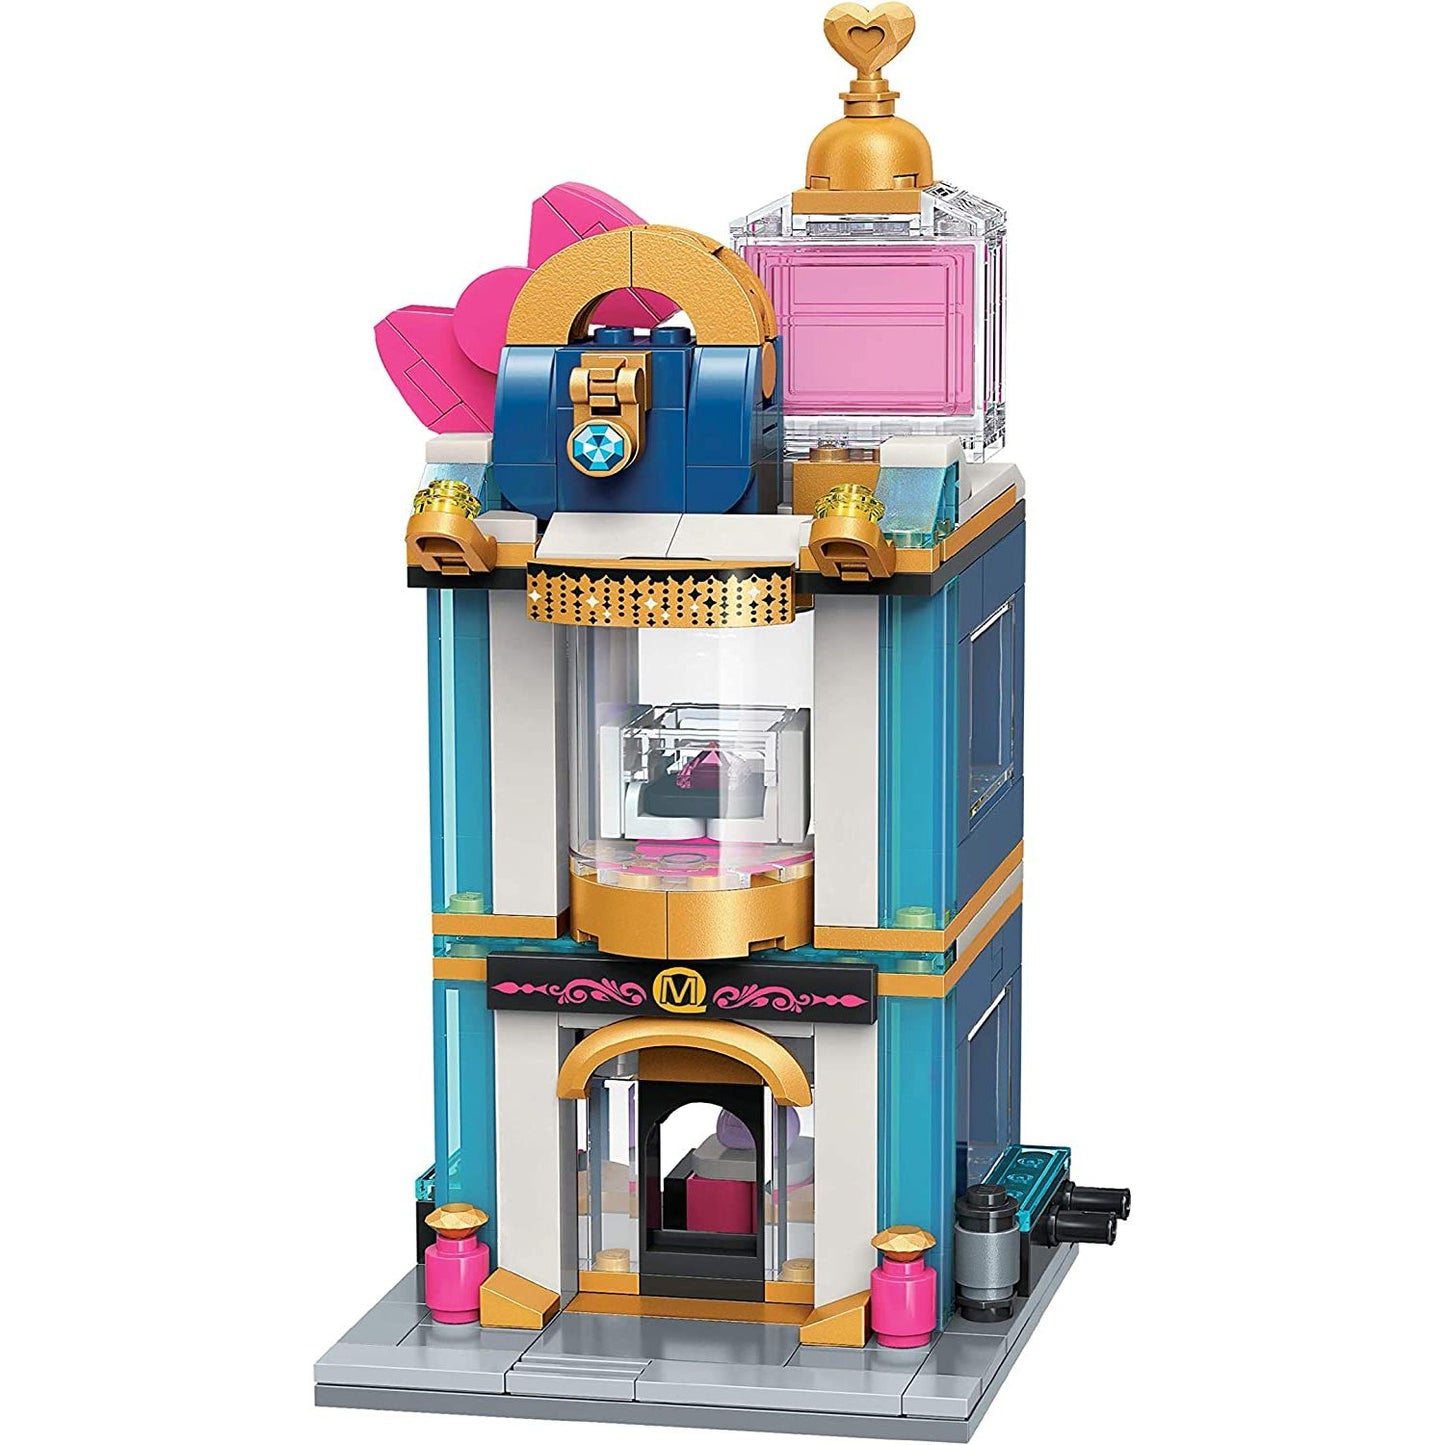 Dragon Blok - City Corner - Luxury Store - 281 Pieces Toy Building Set